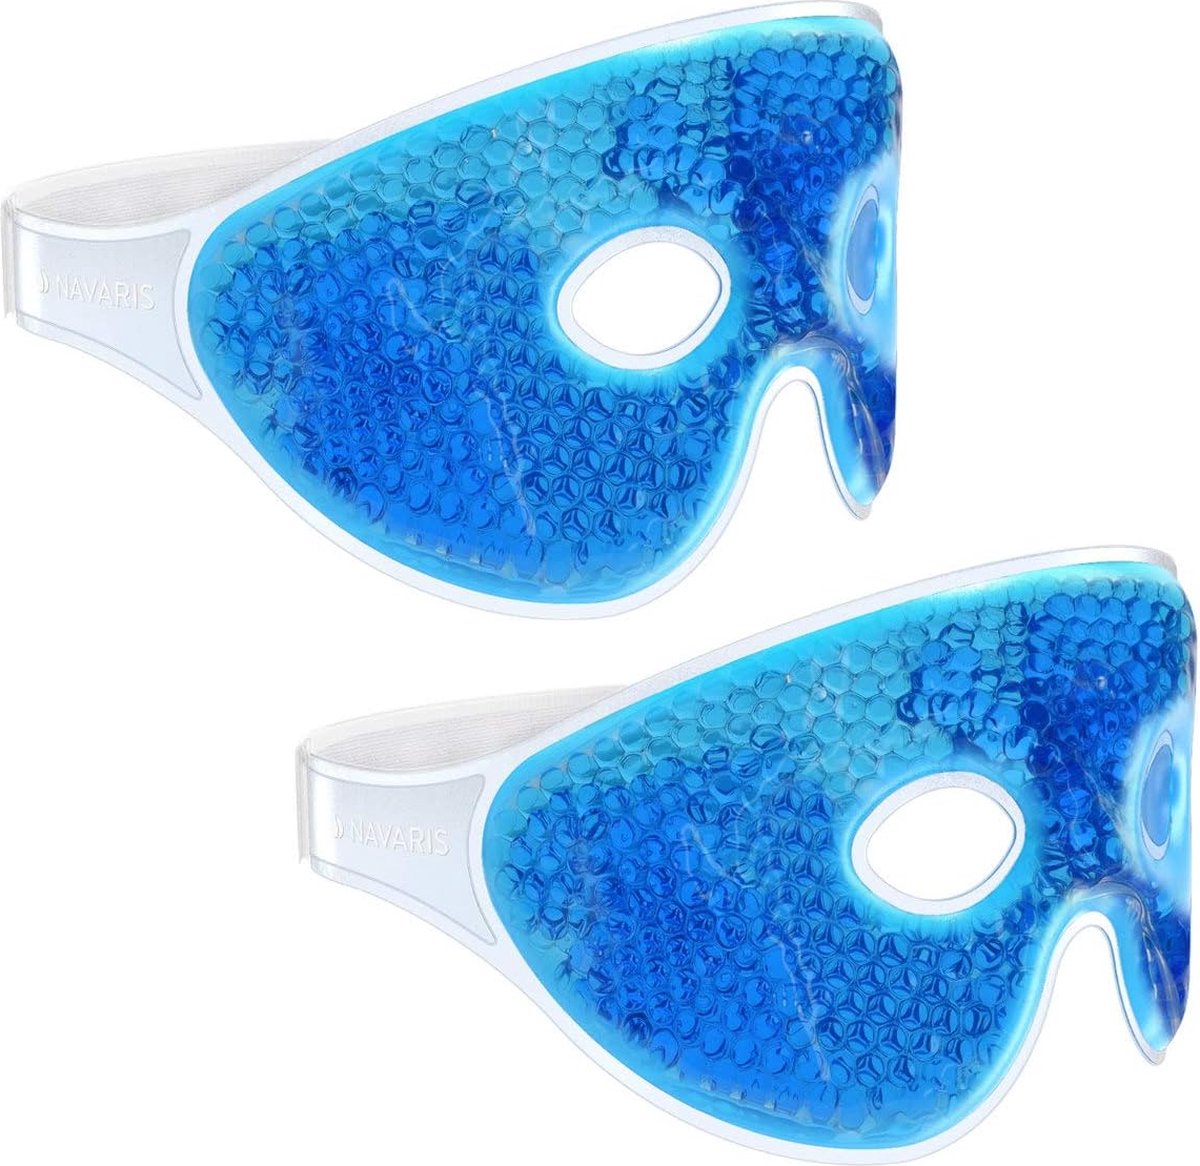 Kleyn - Ijsmasker - Ice Mask - Oogmasker Wallen - Oogmasker Koud - Gelmasker - 2 Stuks - Blauw